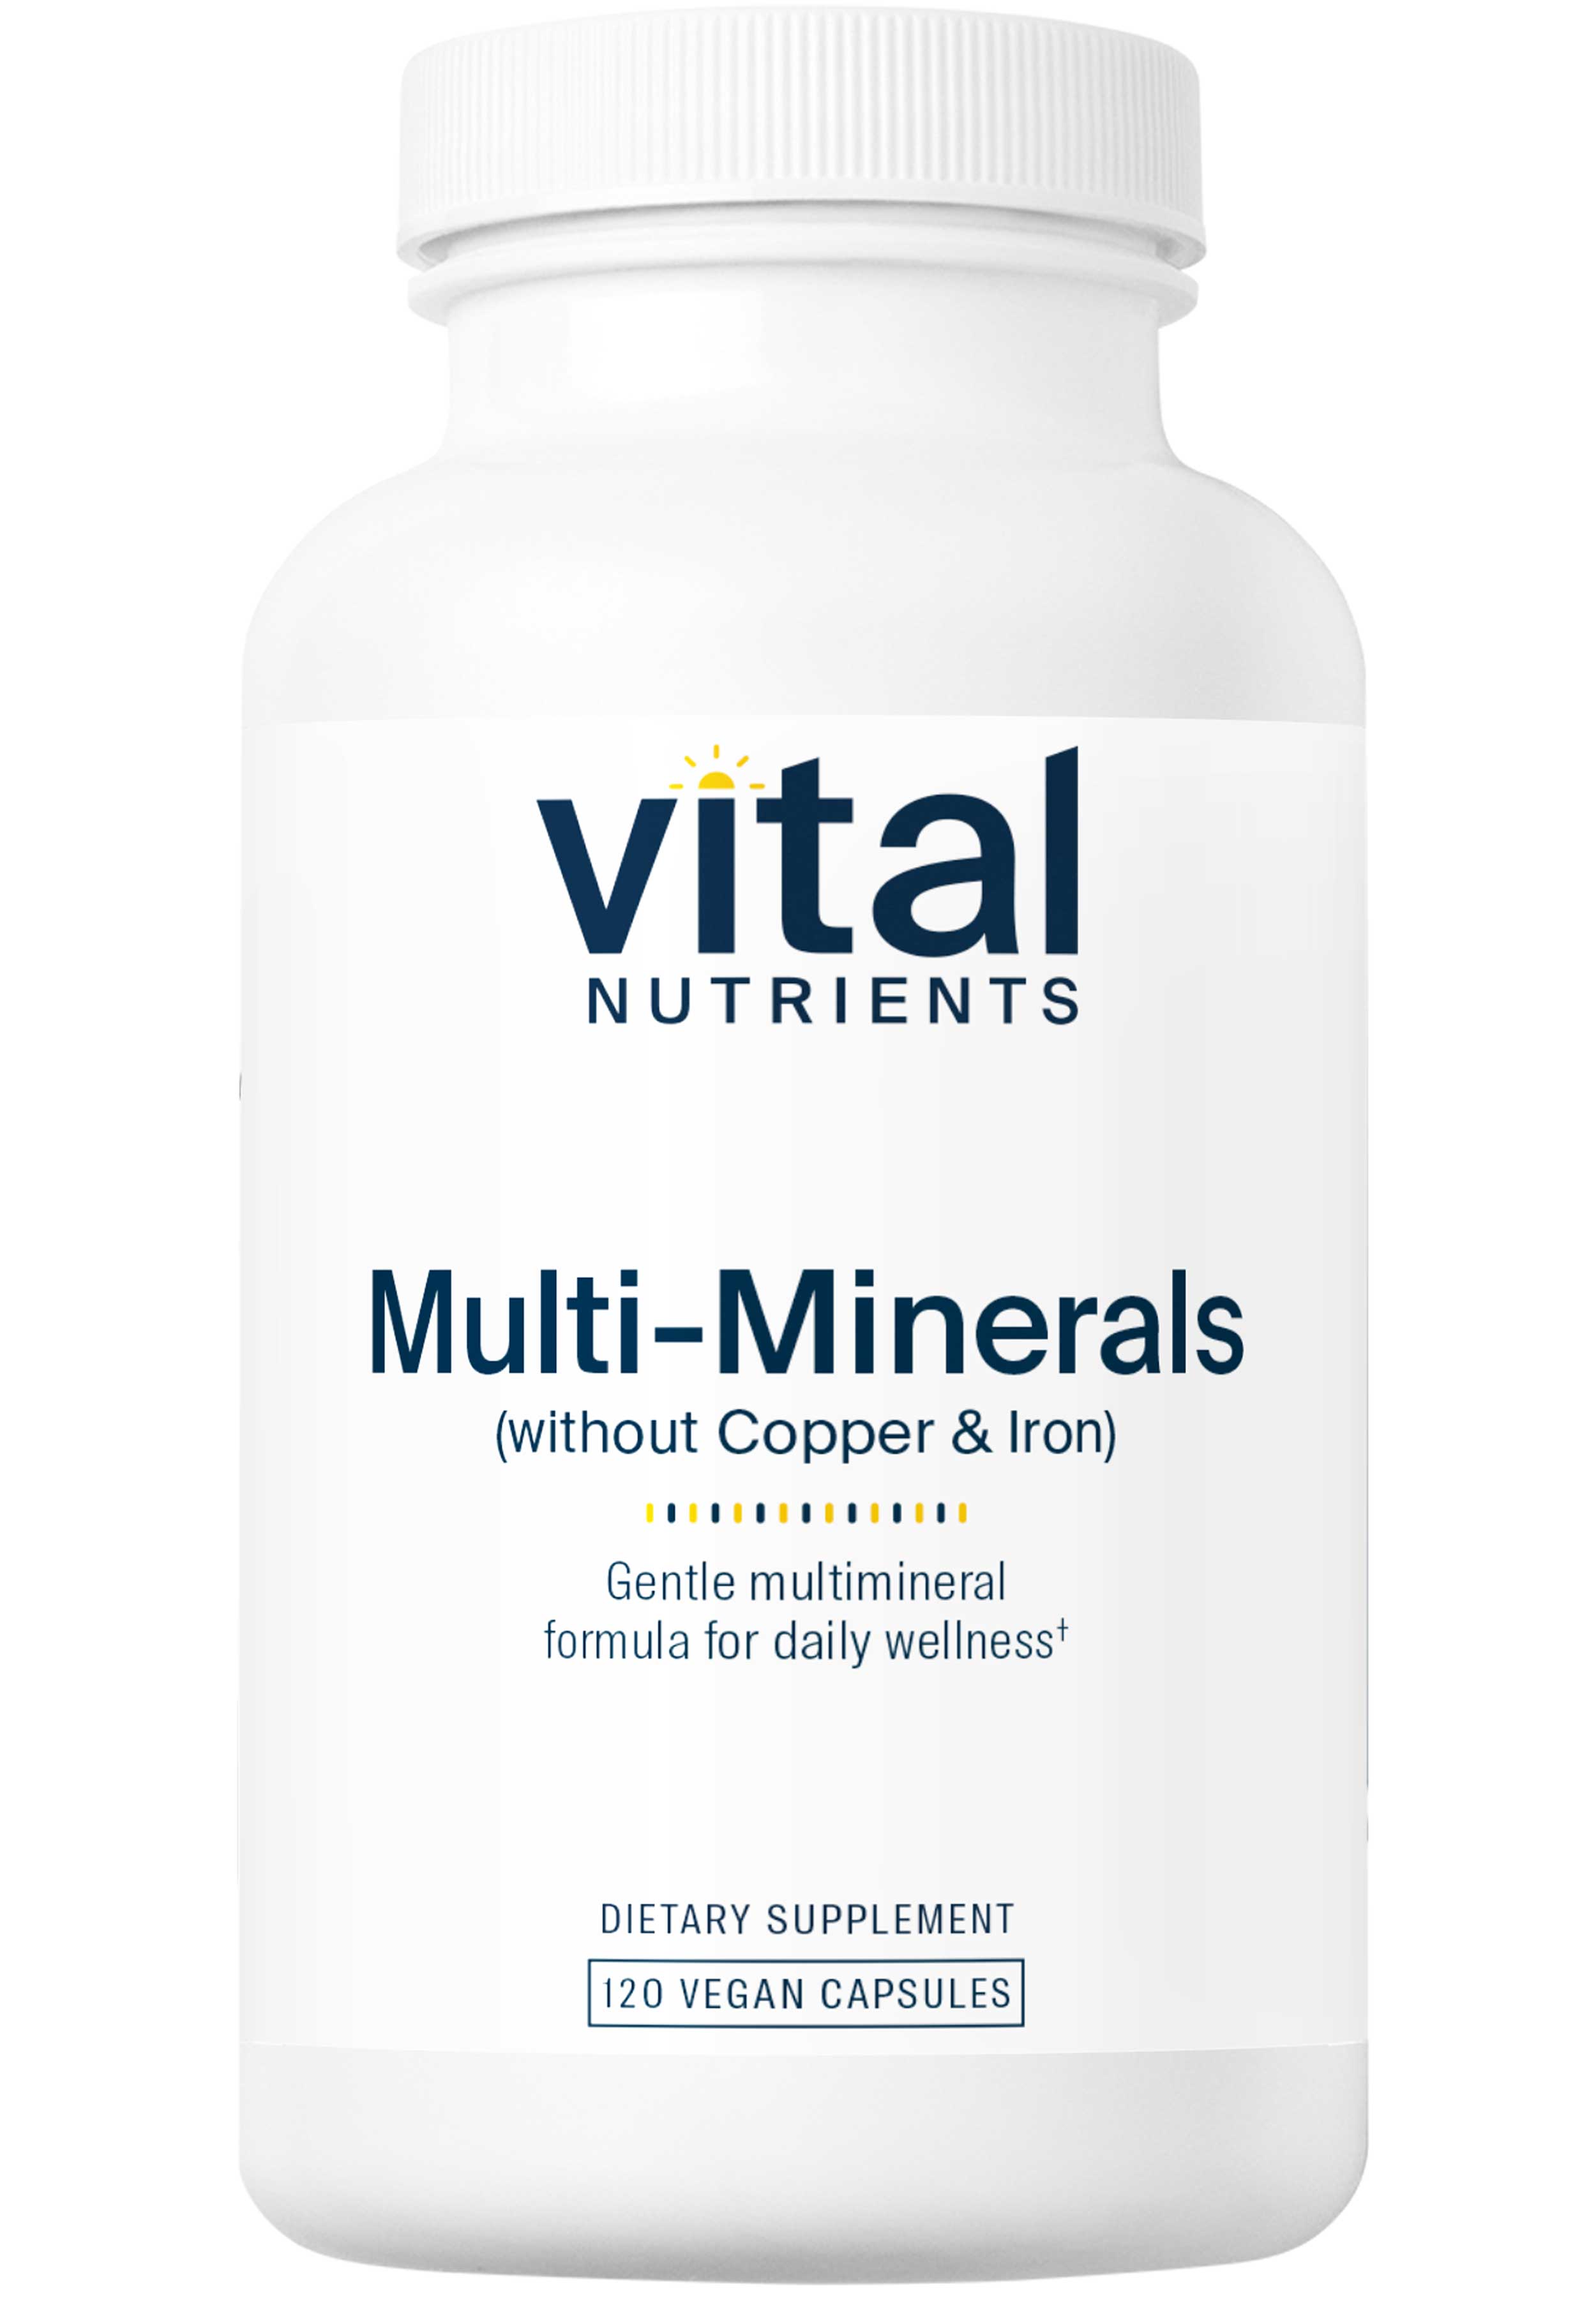 Vital Nutrients Multi-Minerals Citrate/Malate Formula (No Copper or Iron)